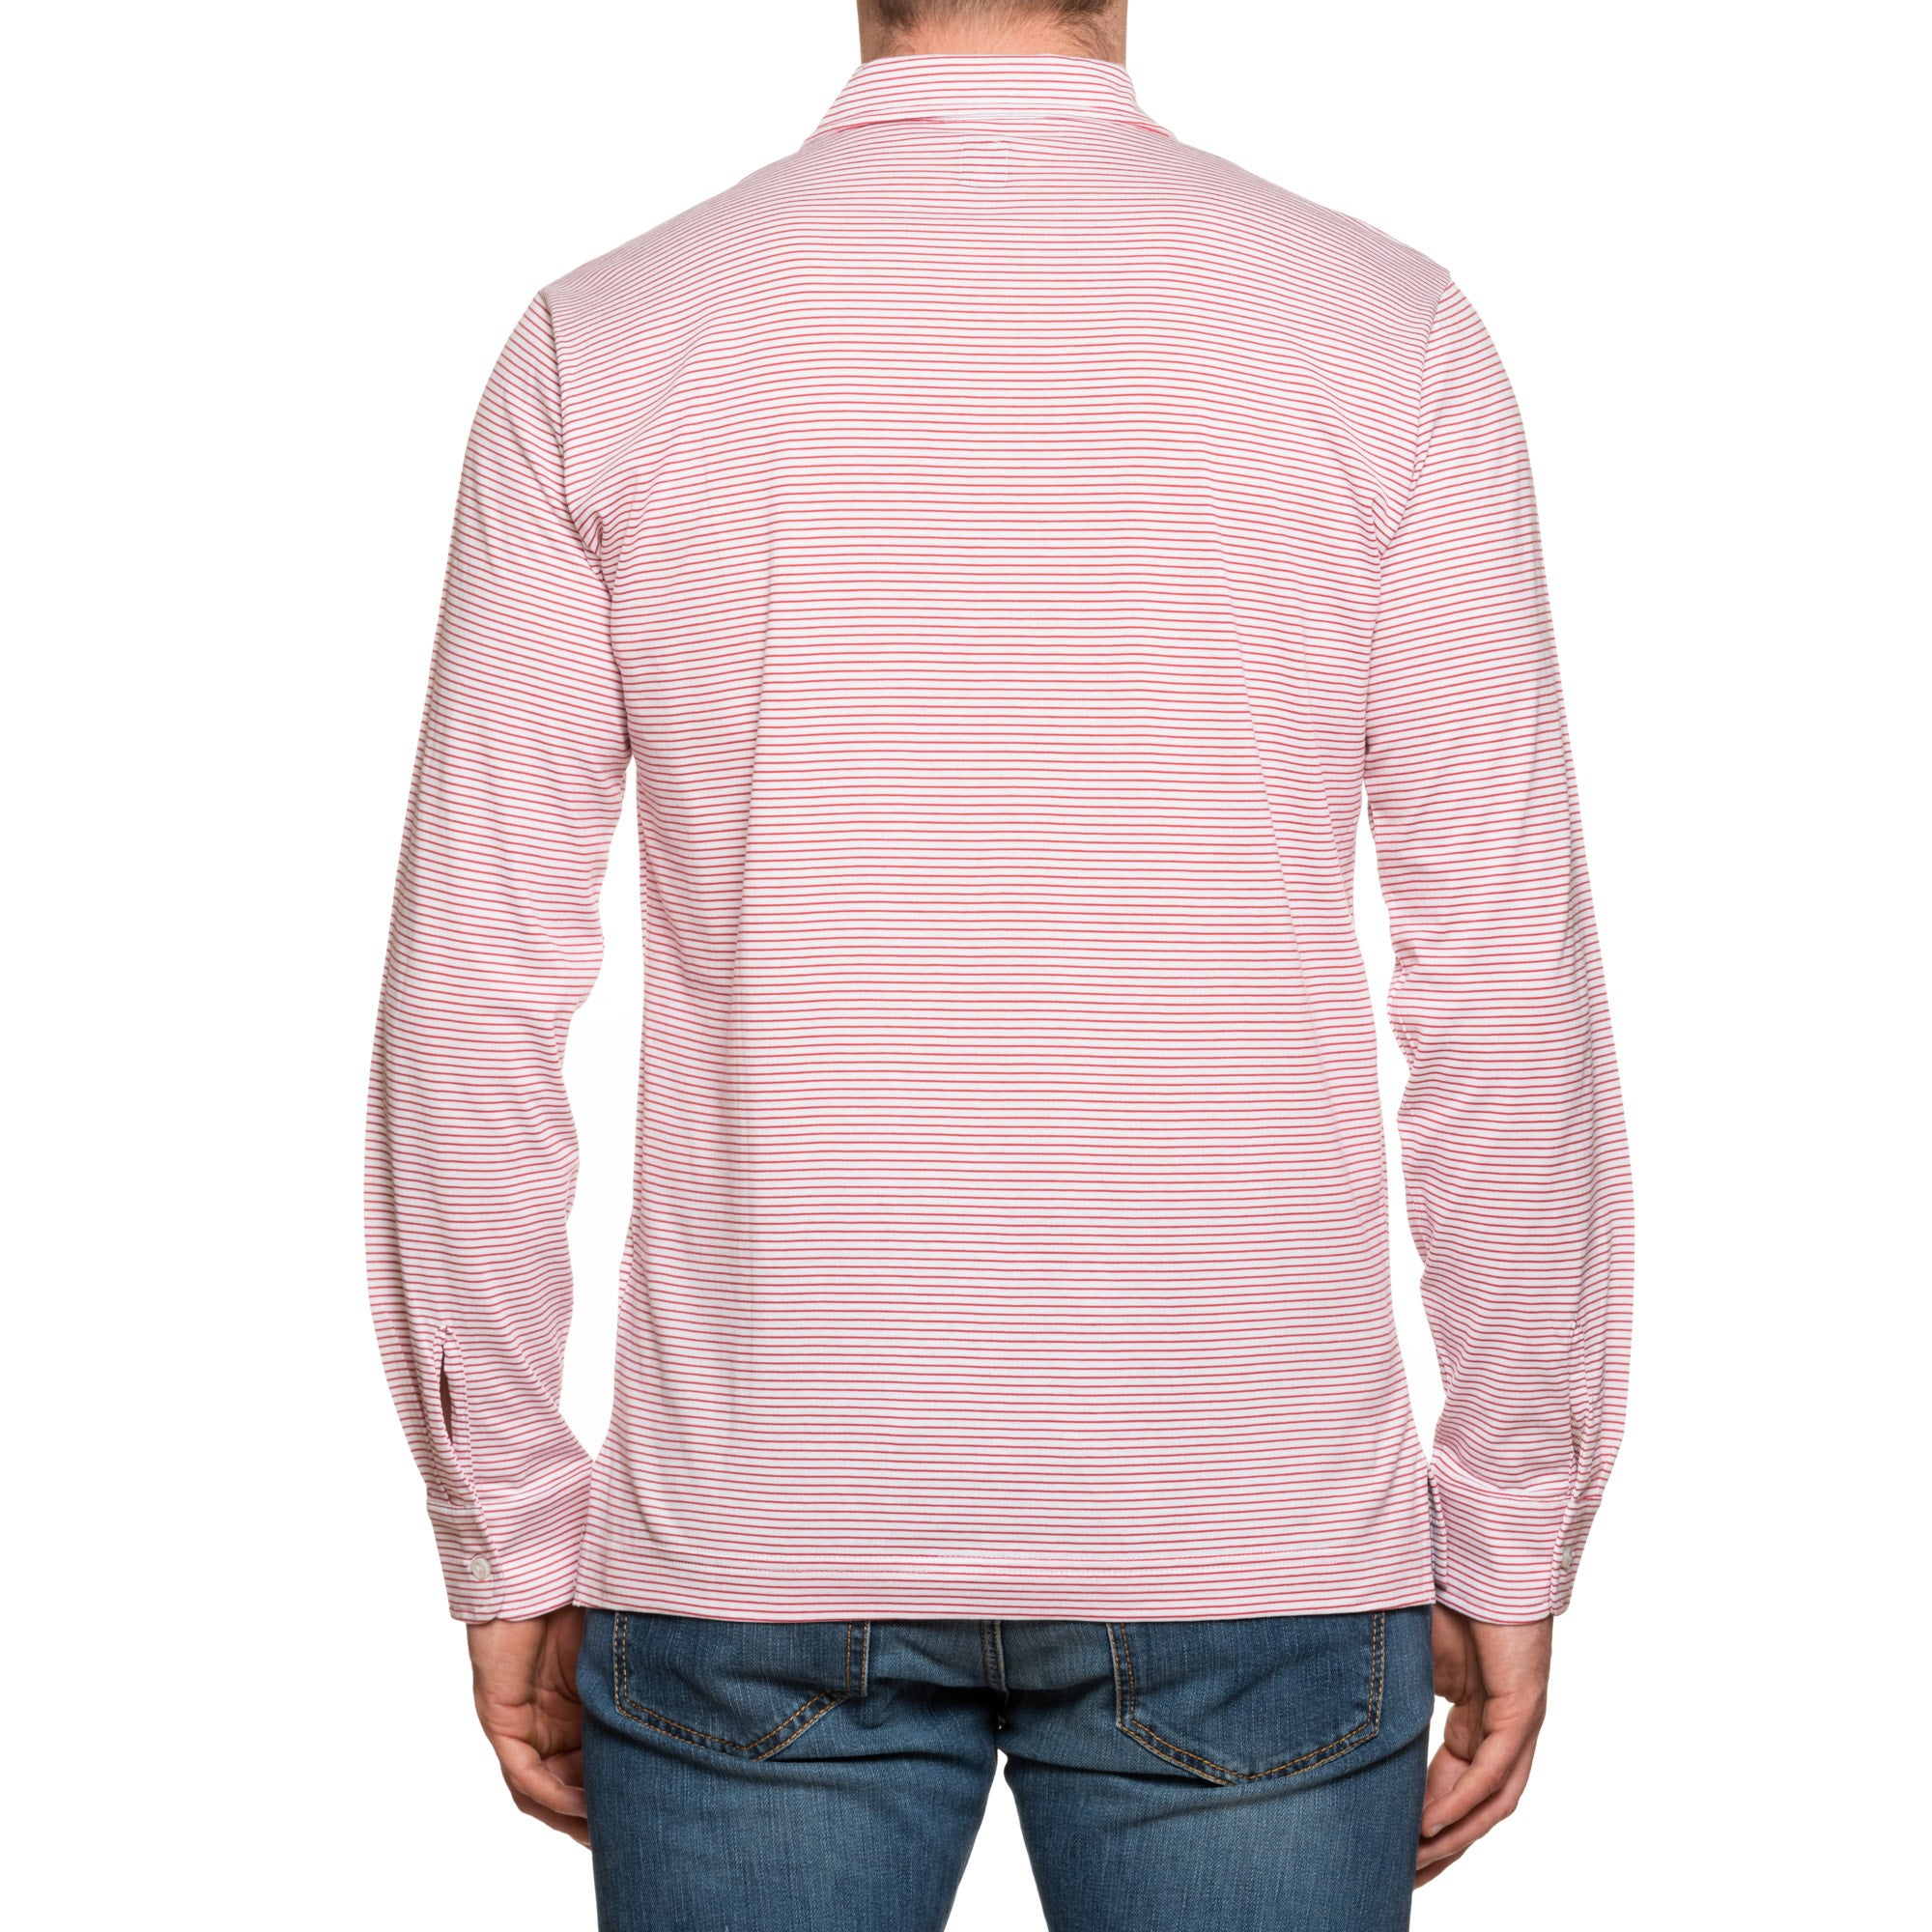 FEDELI "Libeccio" Red Striped Cotton Light Jersey Long Sleeve Polo Shirt NEW FEDELI